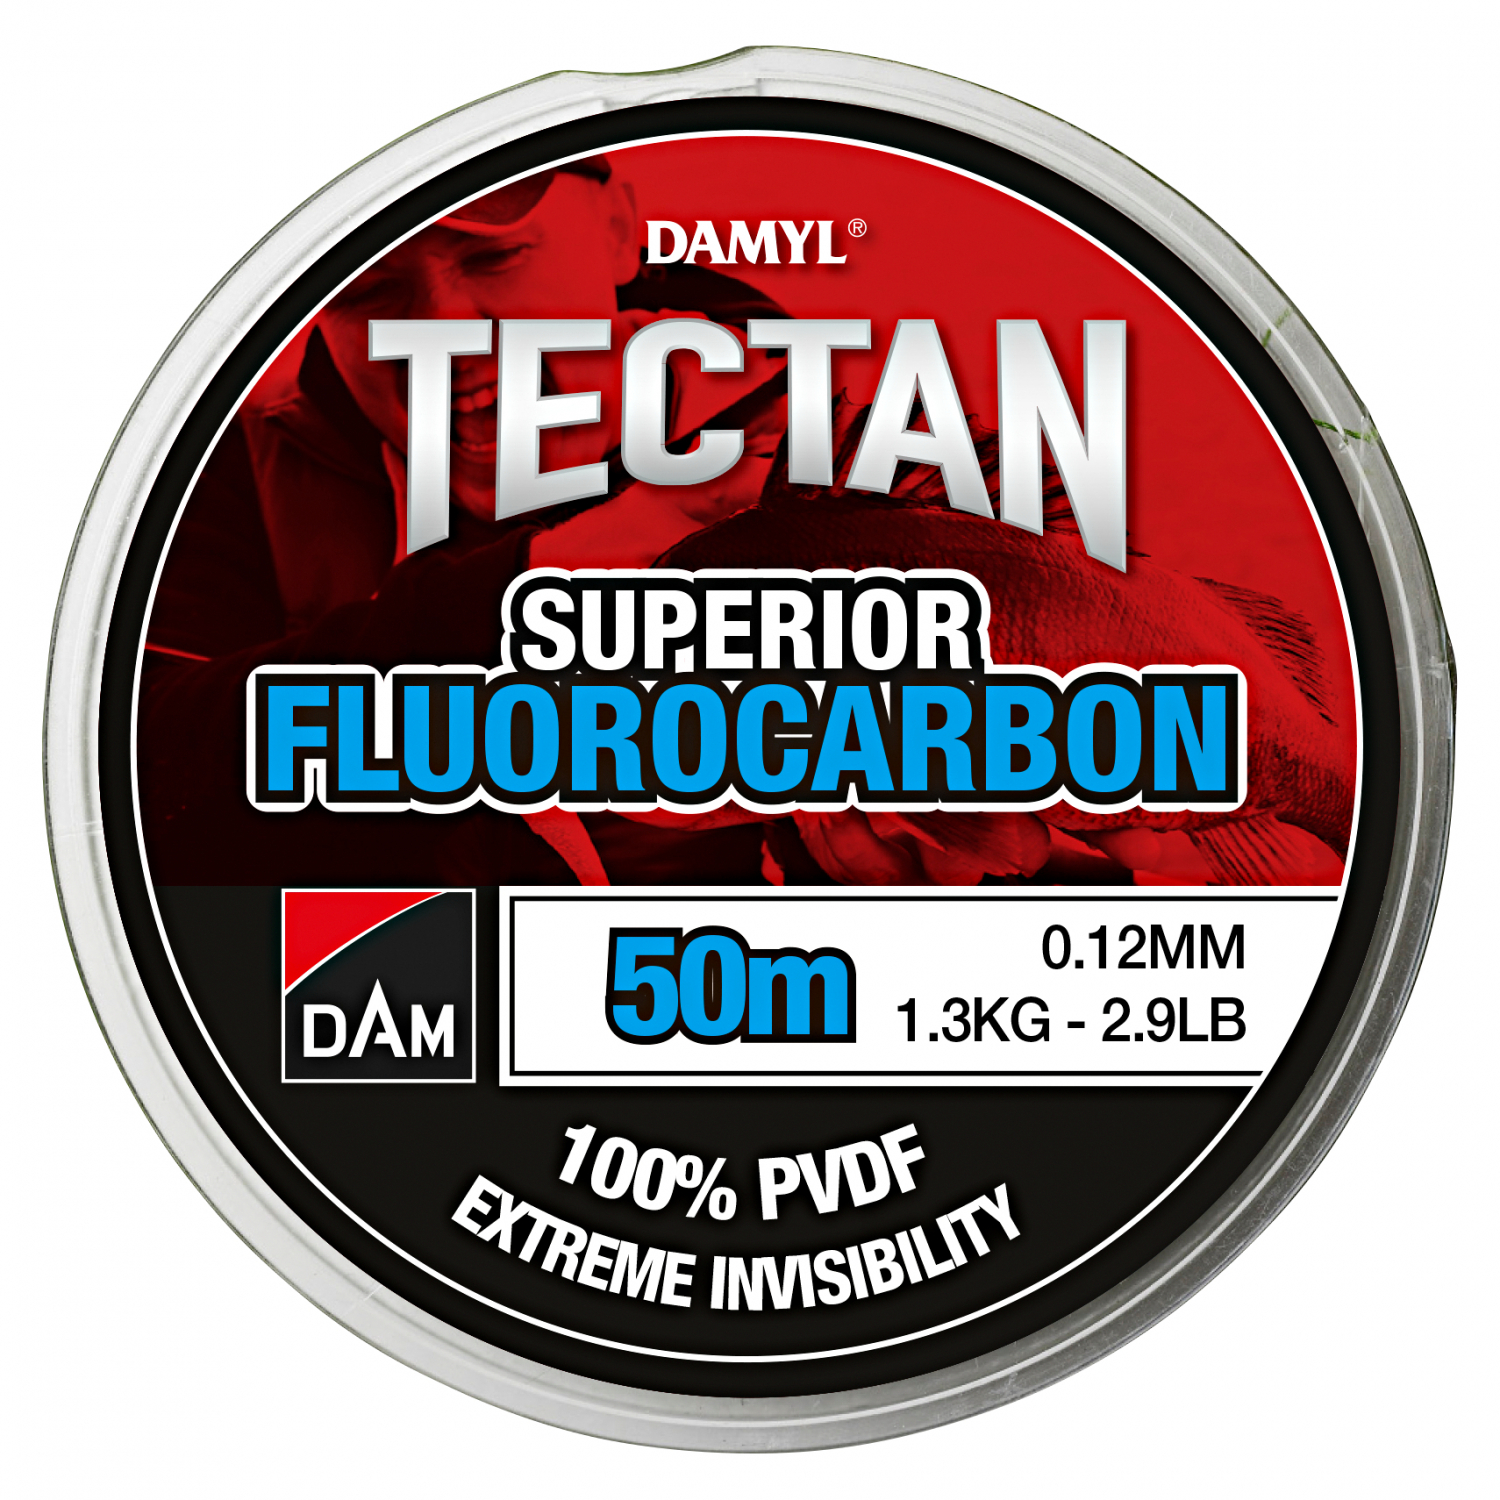 DAM DAM Fishing Line Damyl Tectan Superior Fluorocarbon (clear, 50 m) 